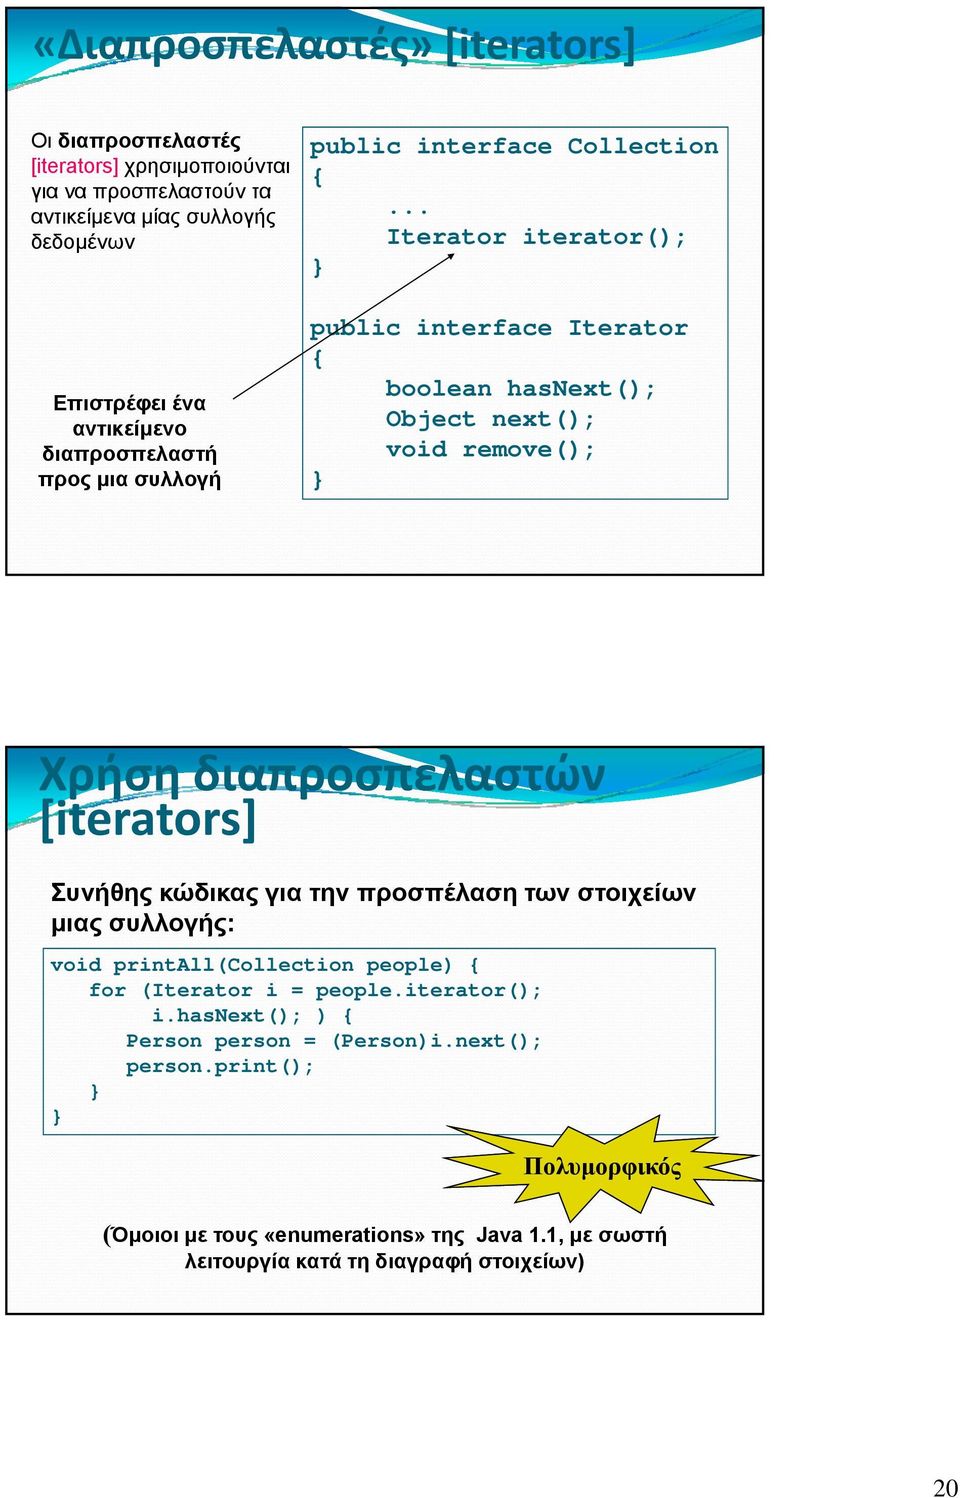 .. Iterator iterator(); public interface Iterator { boolean hasnext(); Object next(); void remove(); Χρήση διαπροσπελαστών [iterators] Συνήθης κώδικας για την